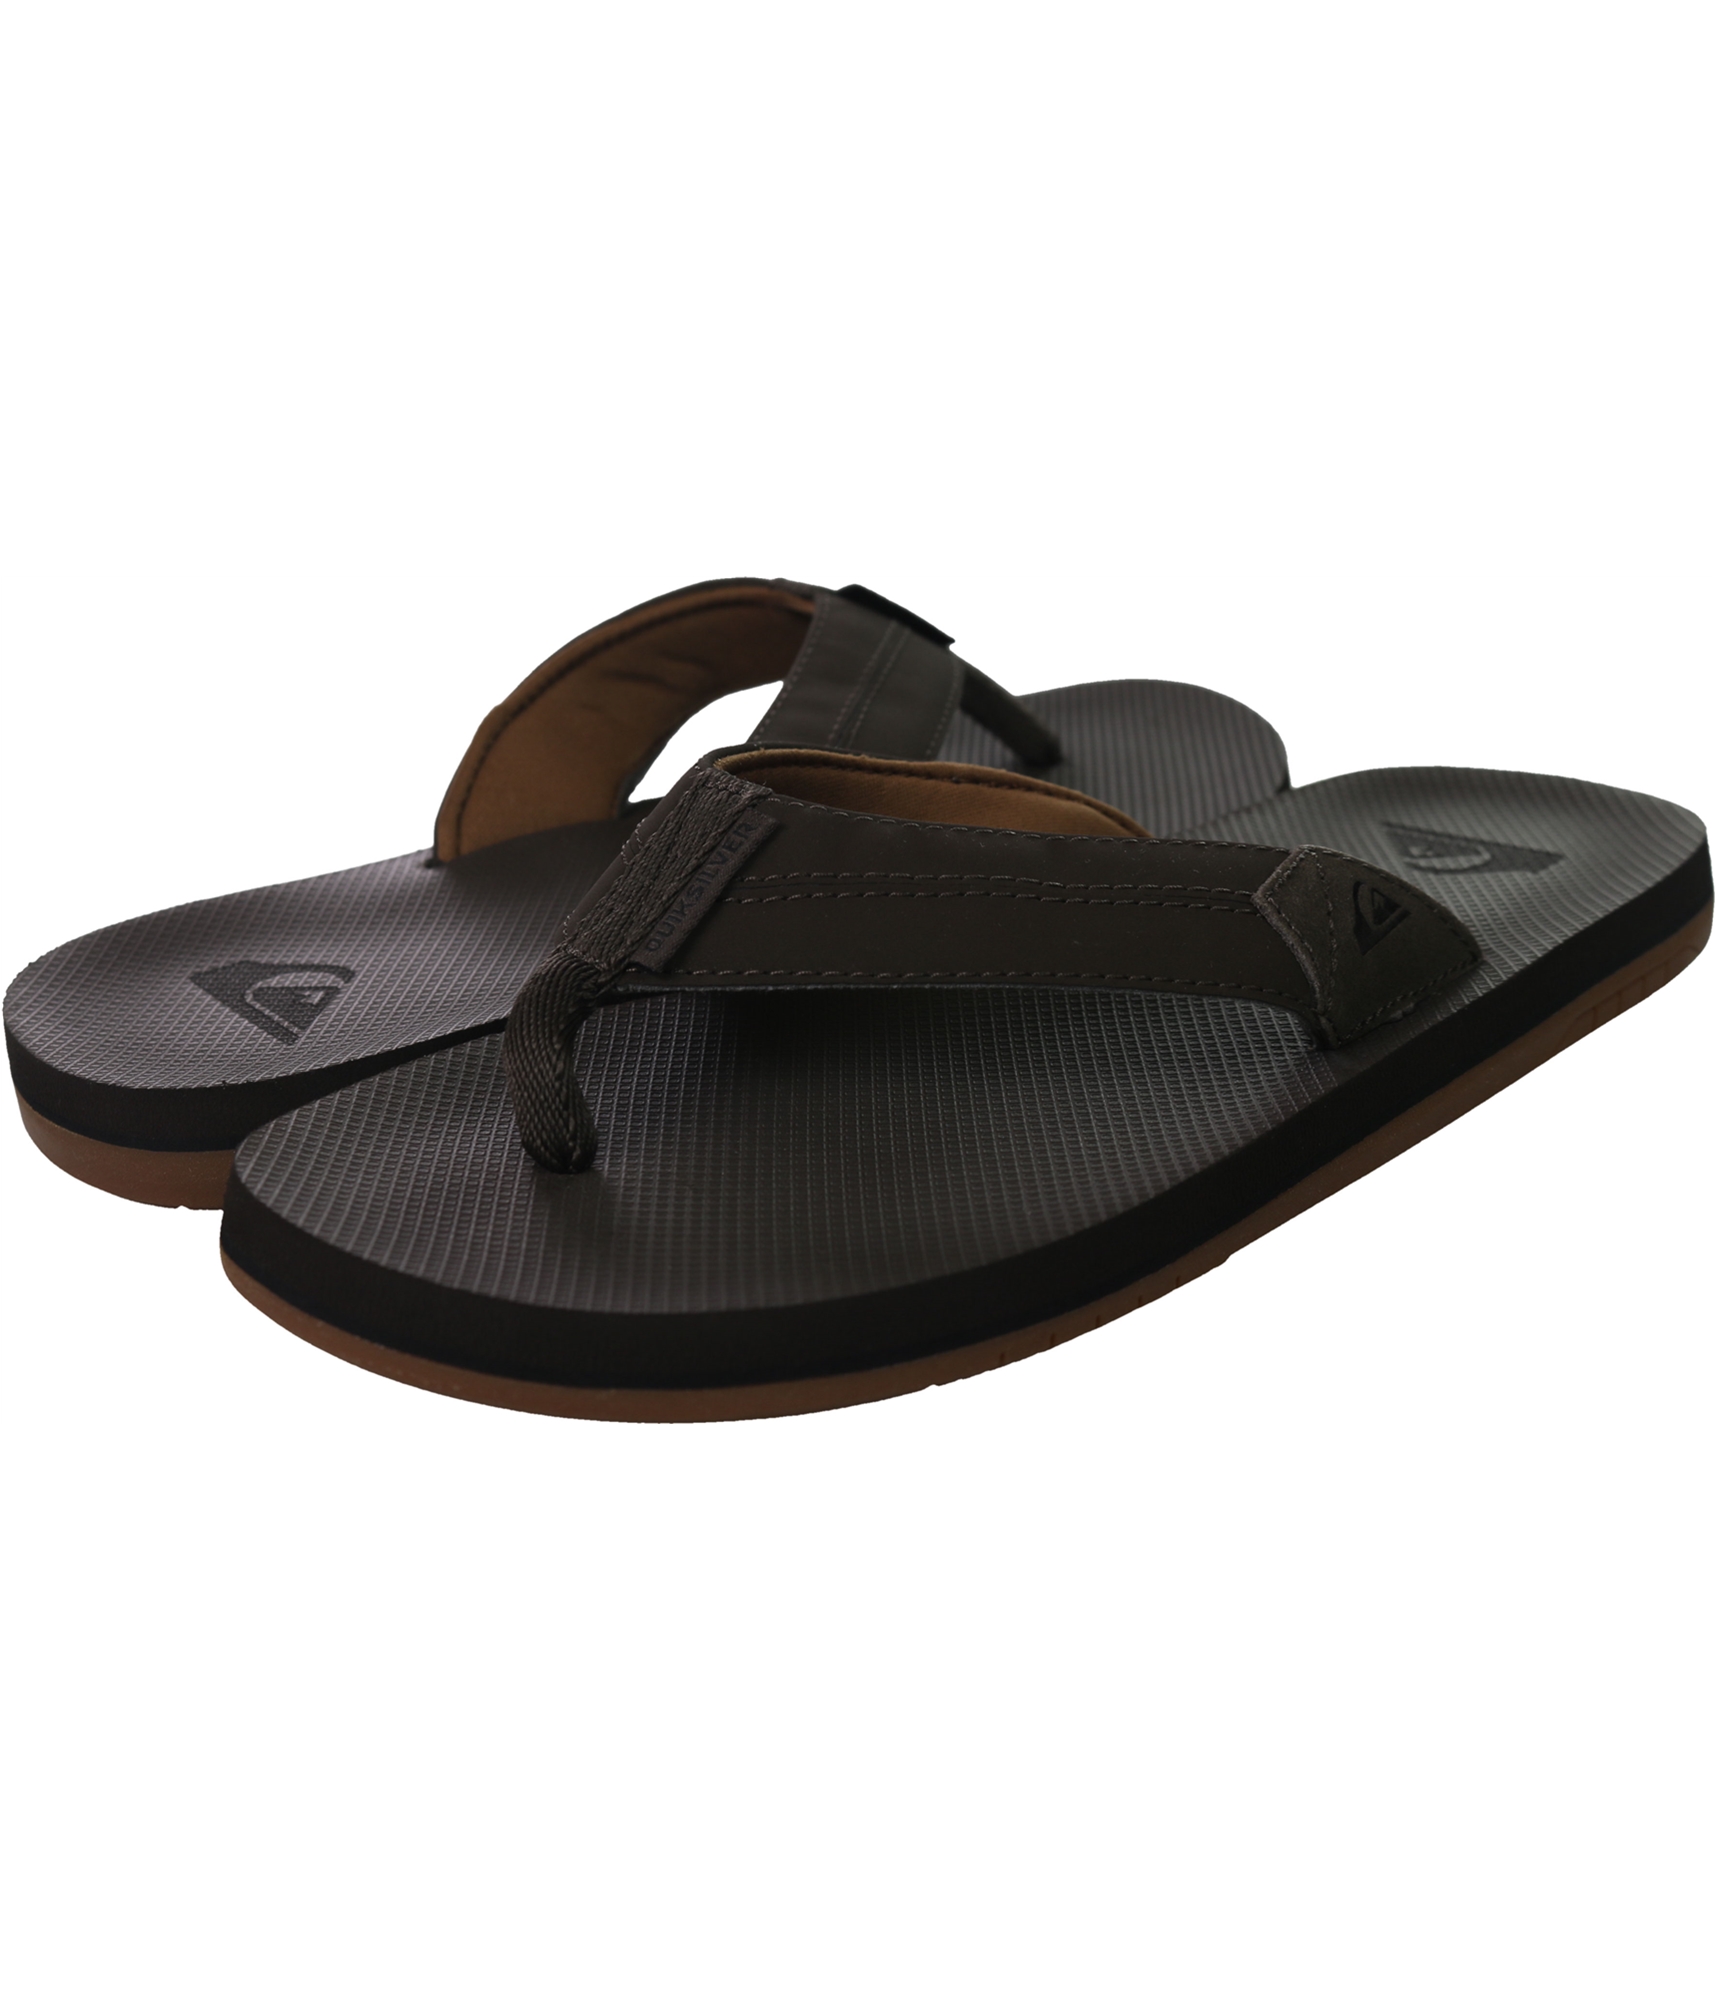 Quiksilver Mens Coastal Oasis II Flip Flop Sandals, Brown, 10 D(M) US ...